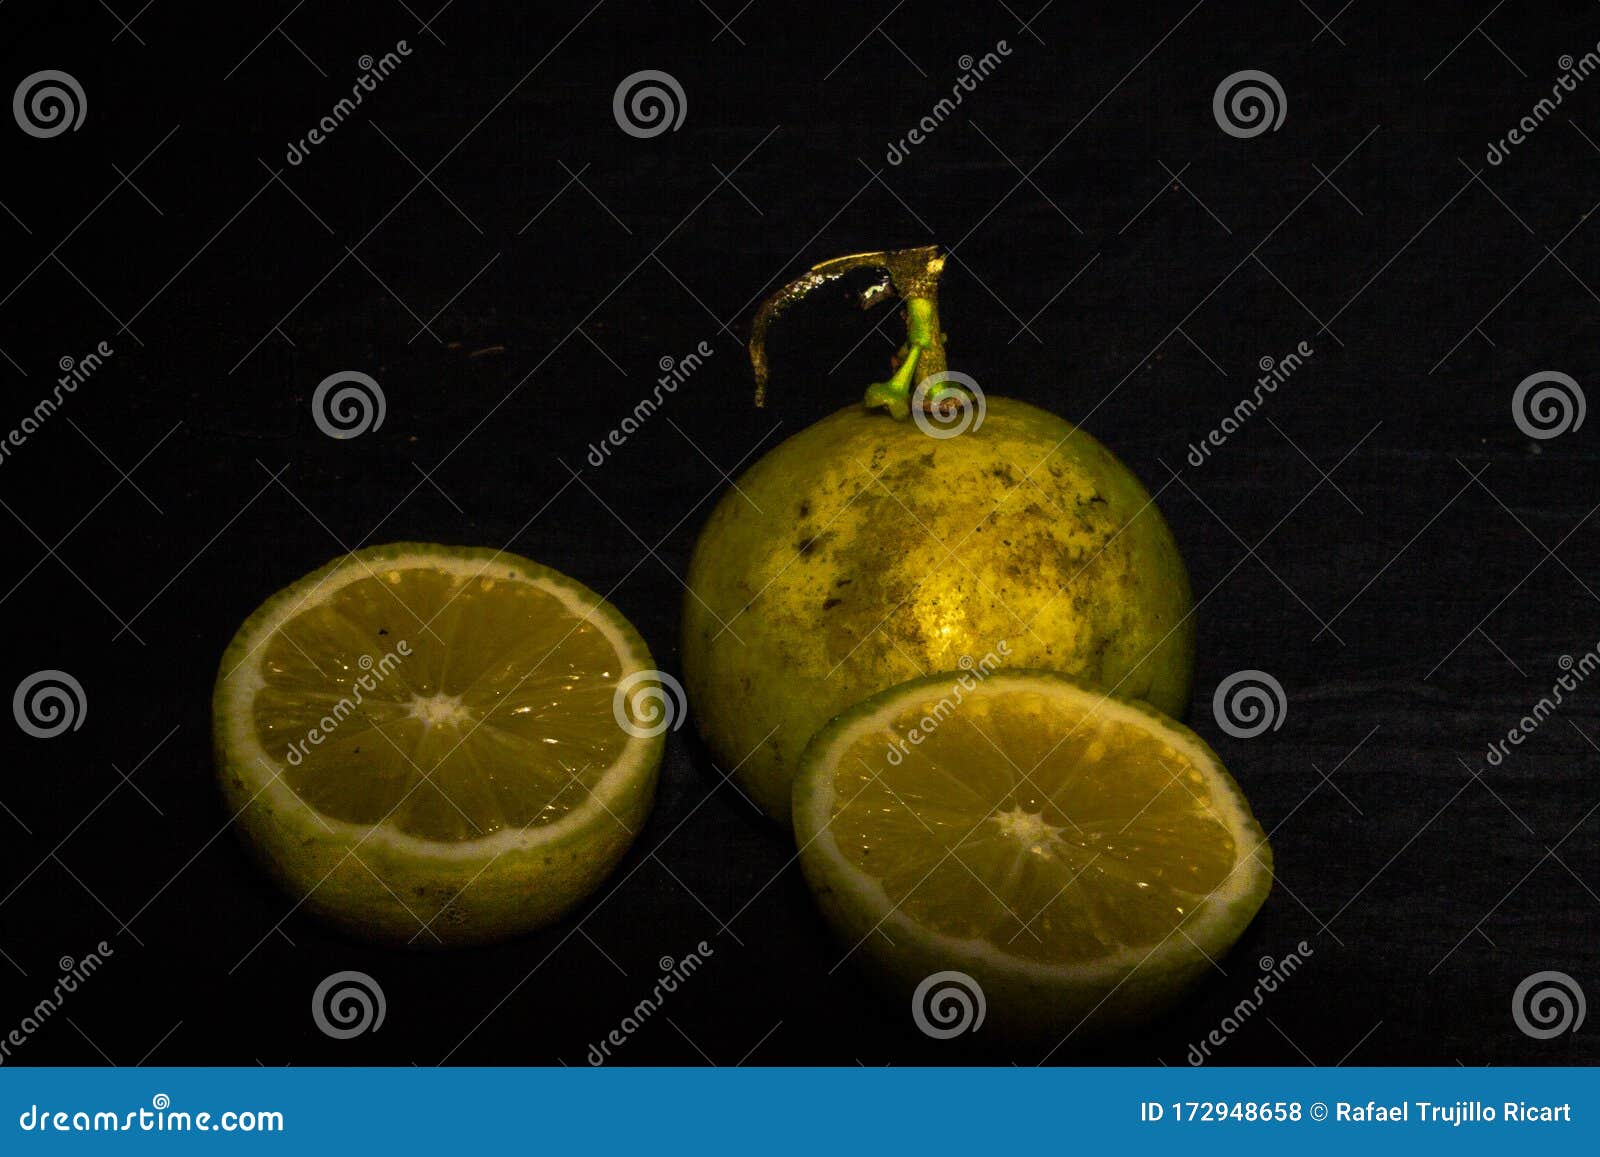 sweet tropical lemons